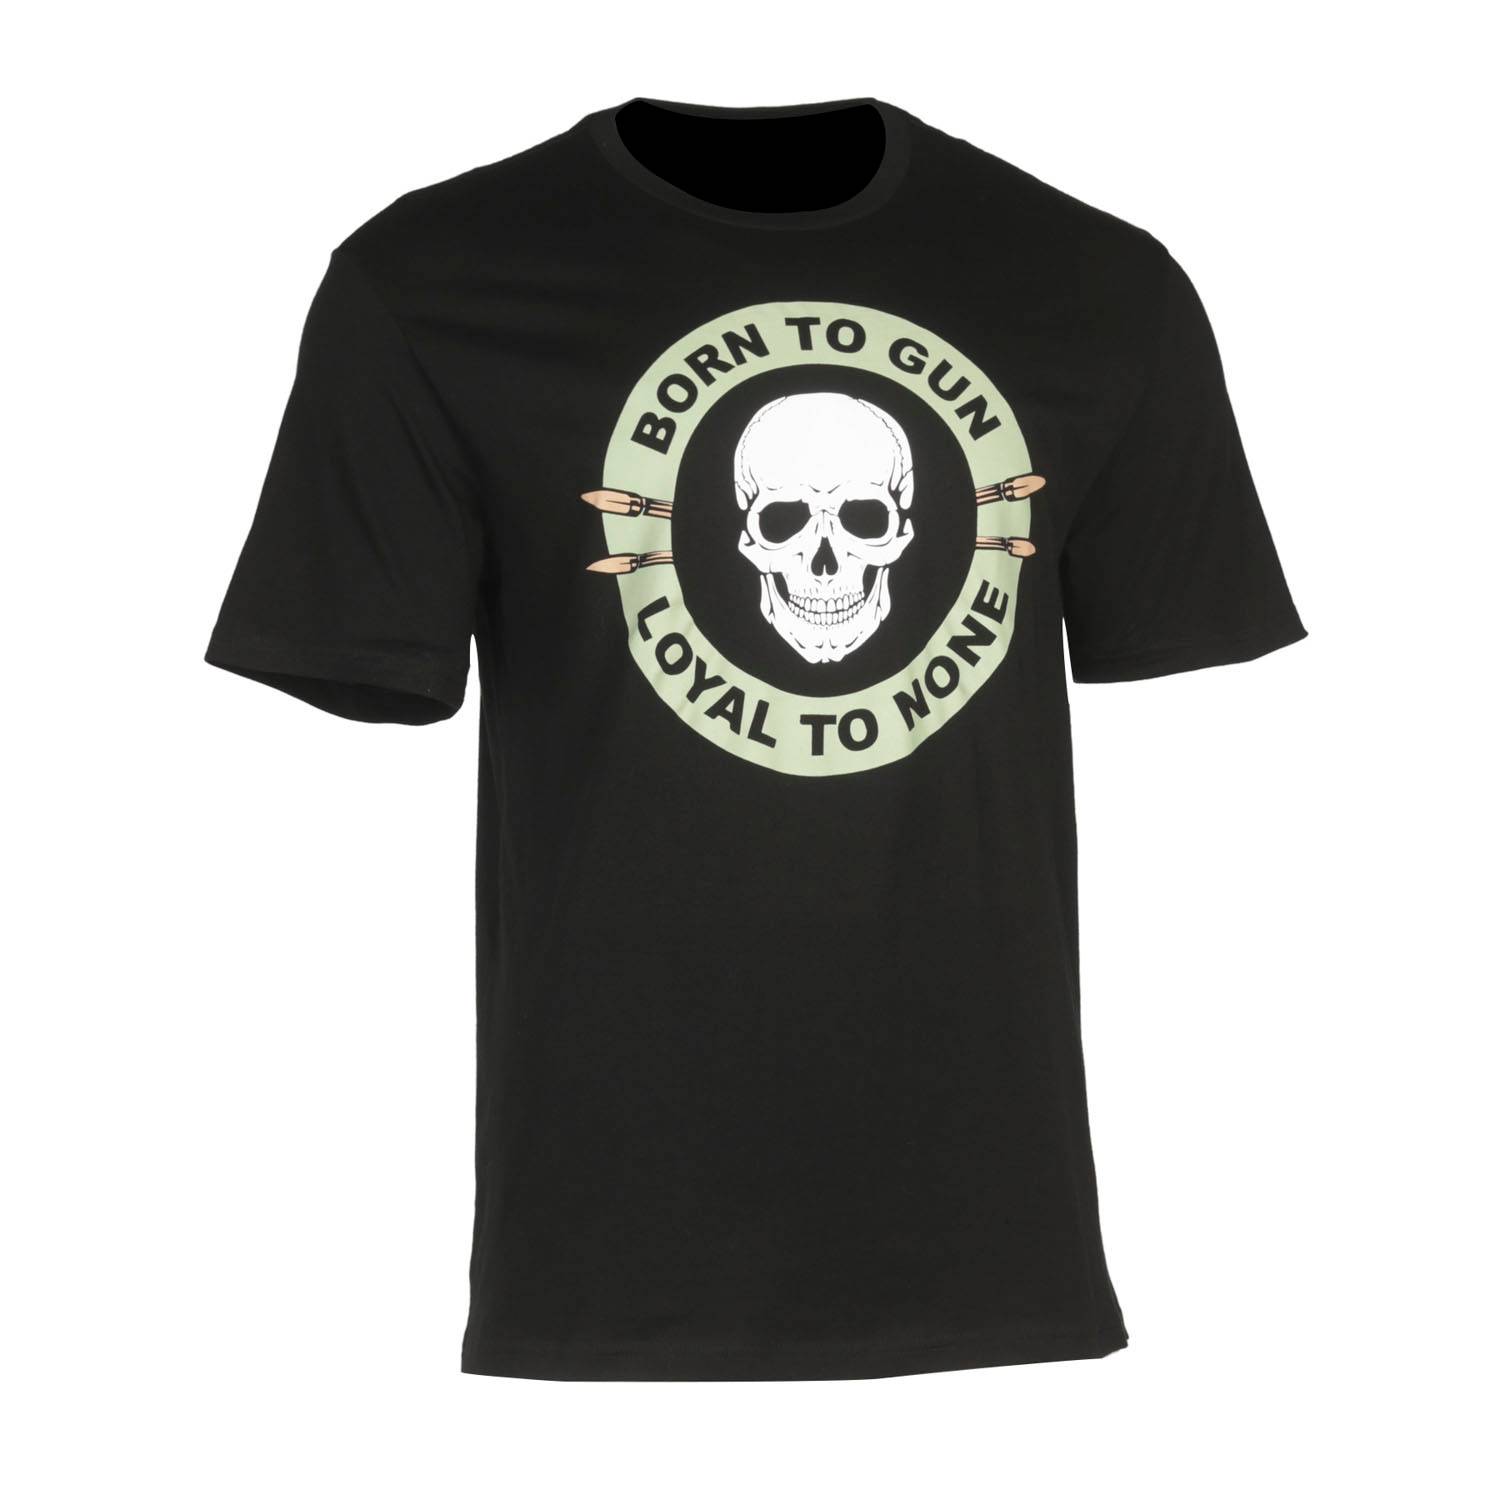 Galls "Born to Gun" Graphic T-Shirt (Black)